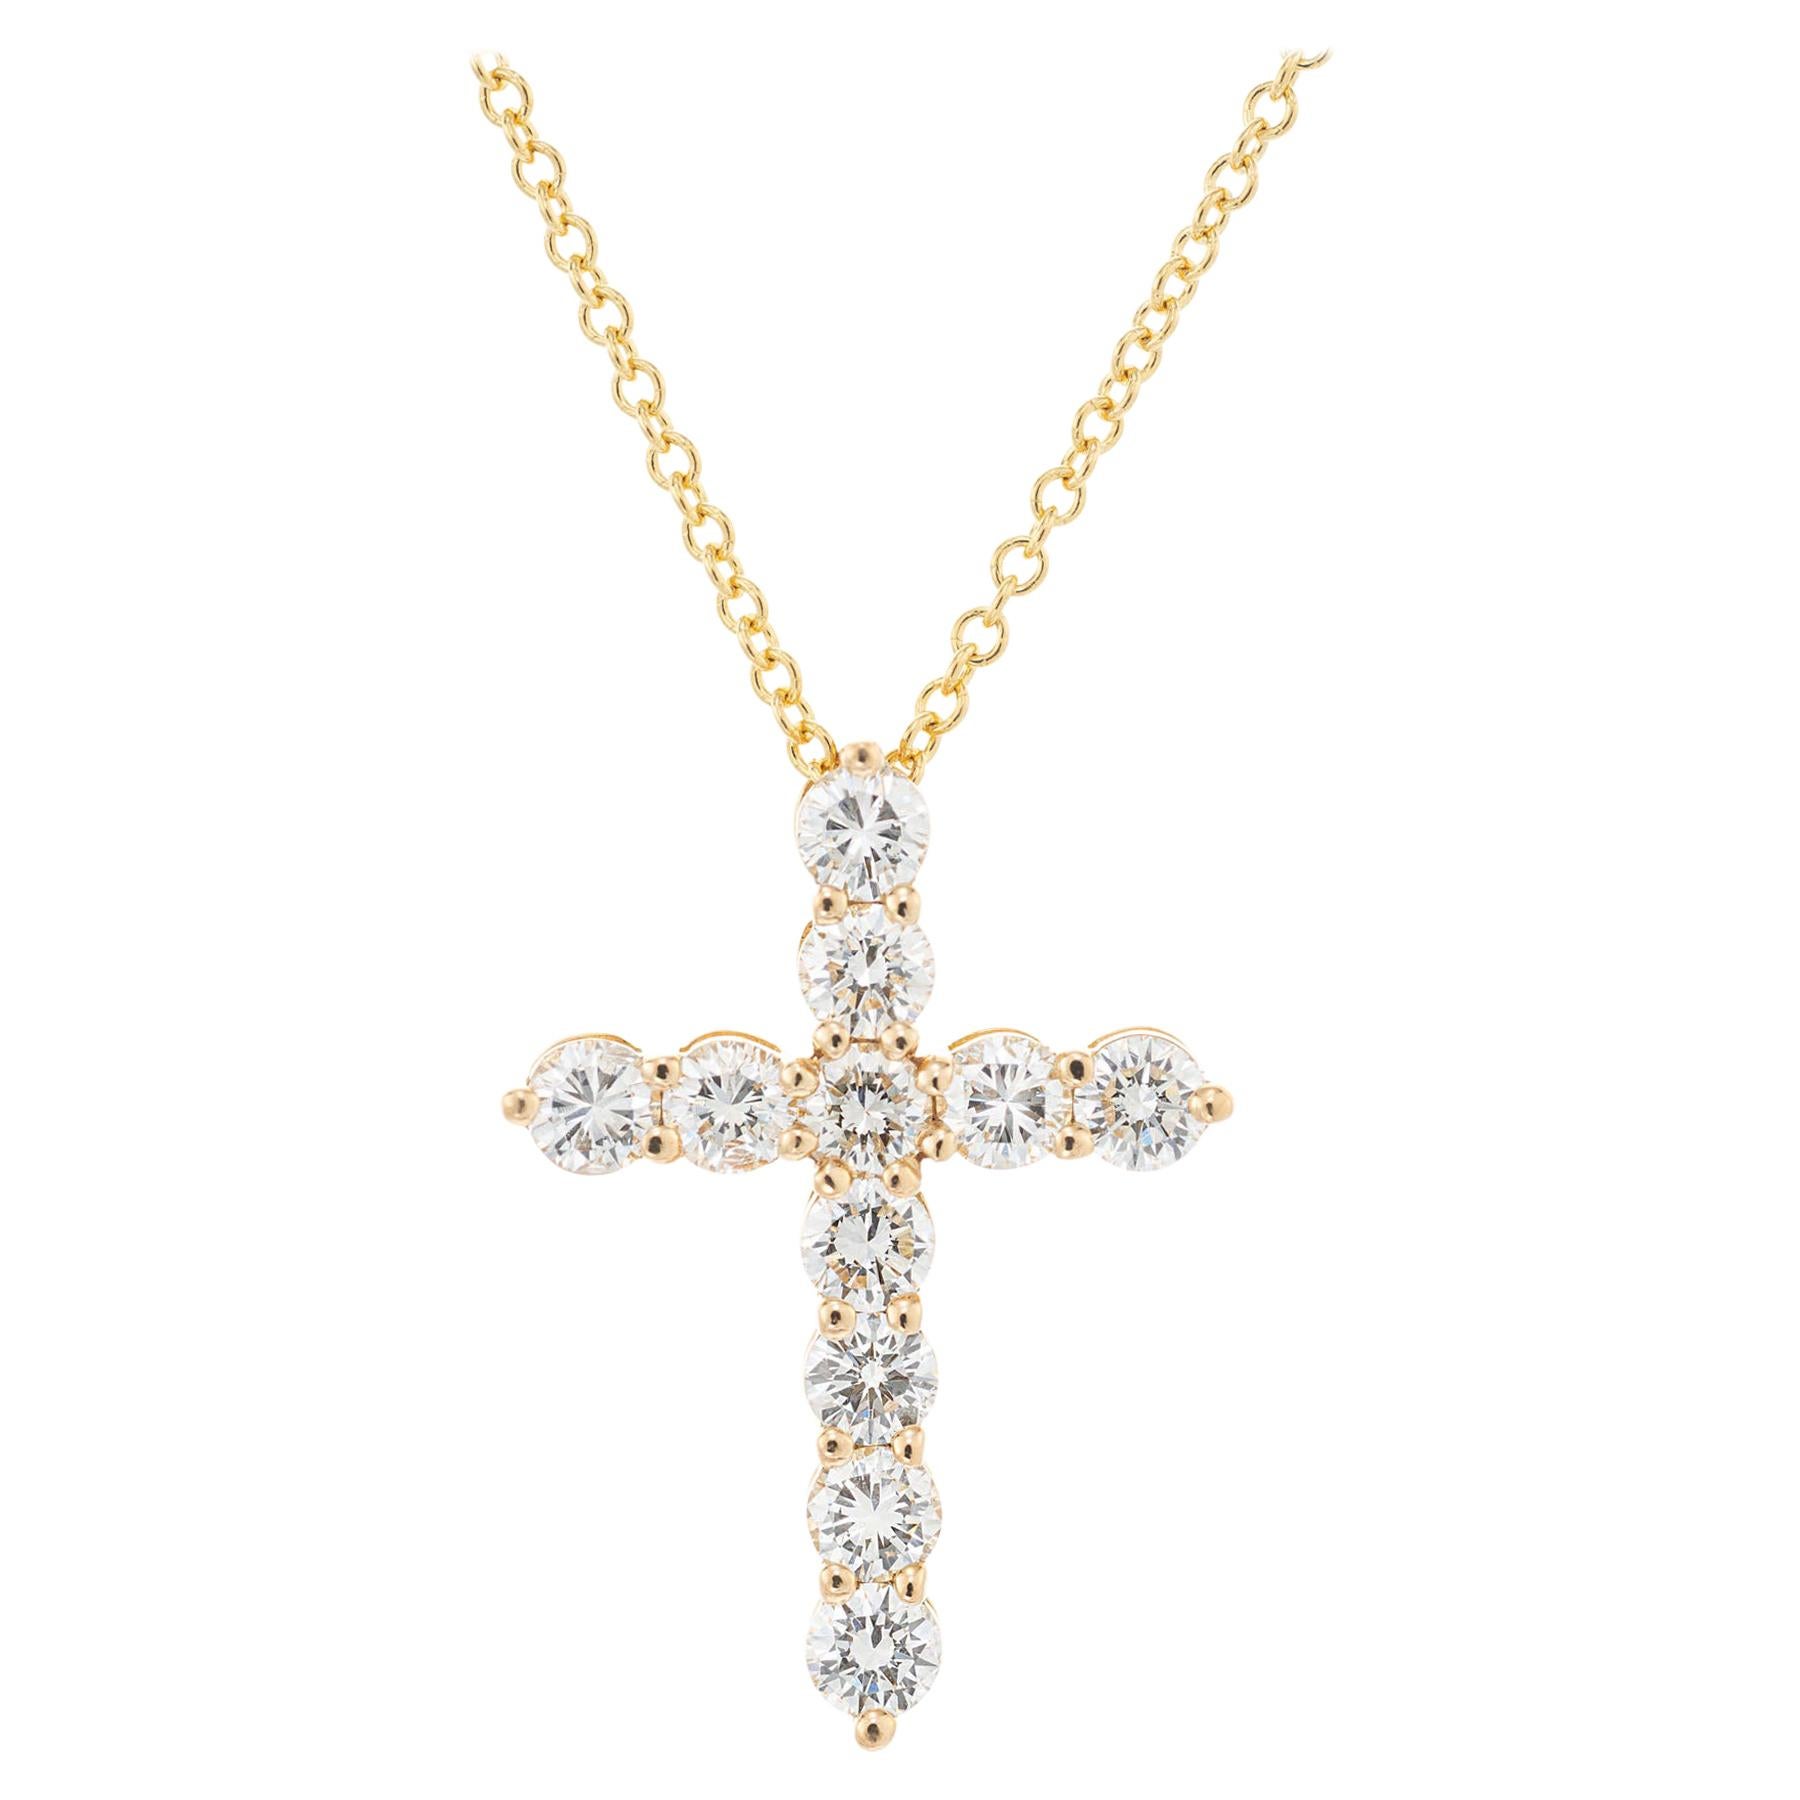 Peter Suchy Collier pendentif croix en or jaune avec diamants de 0,63 carat